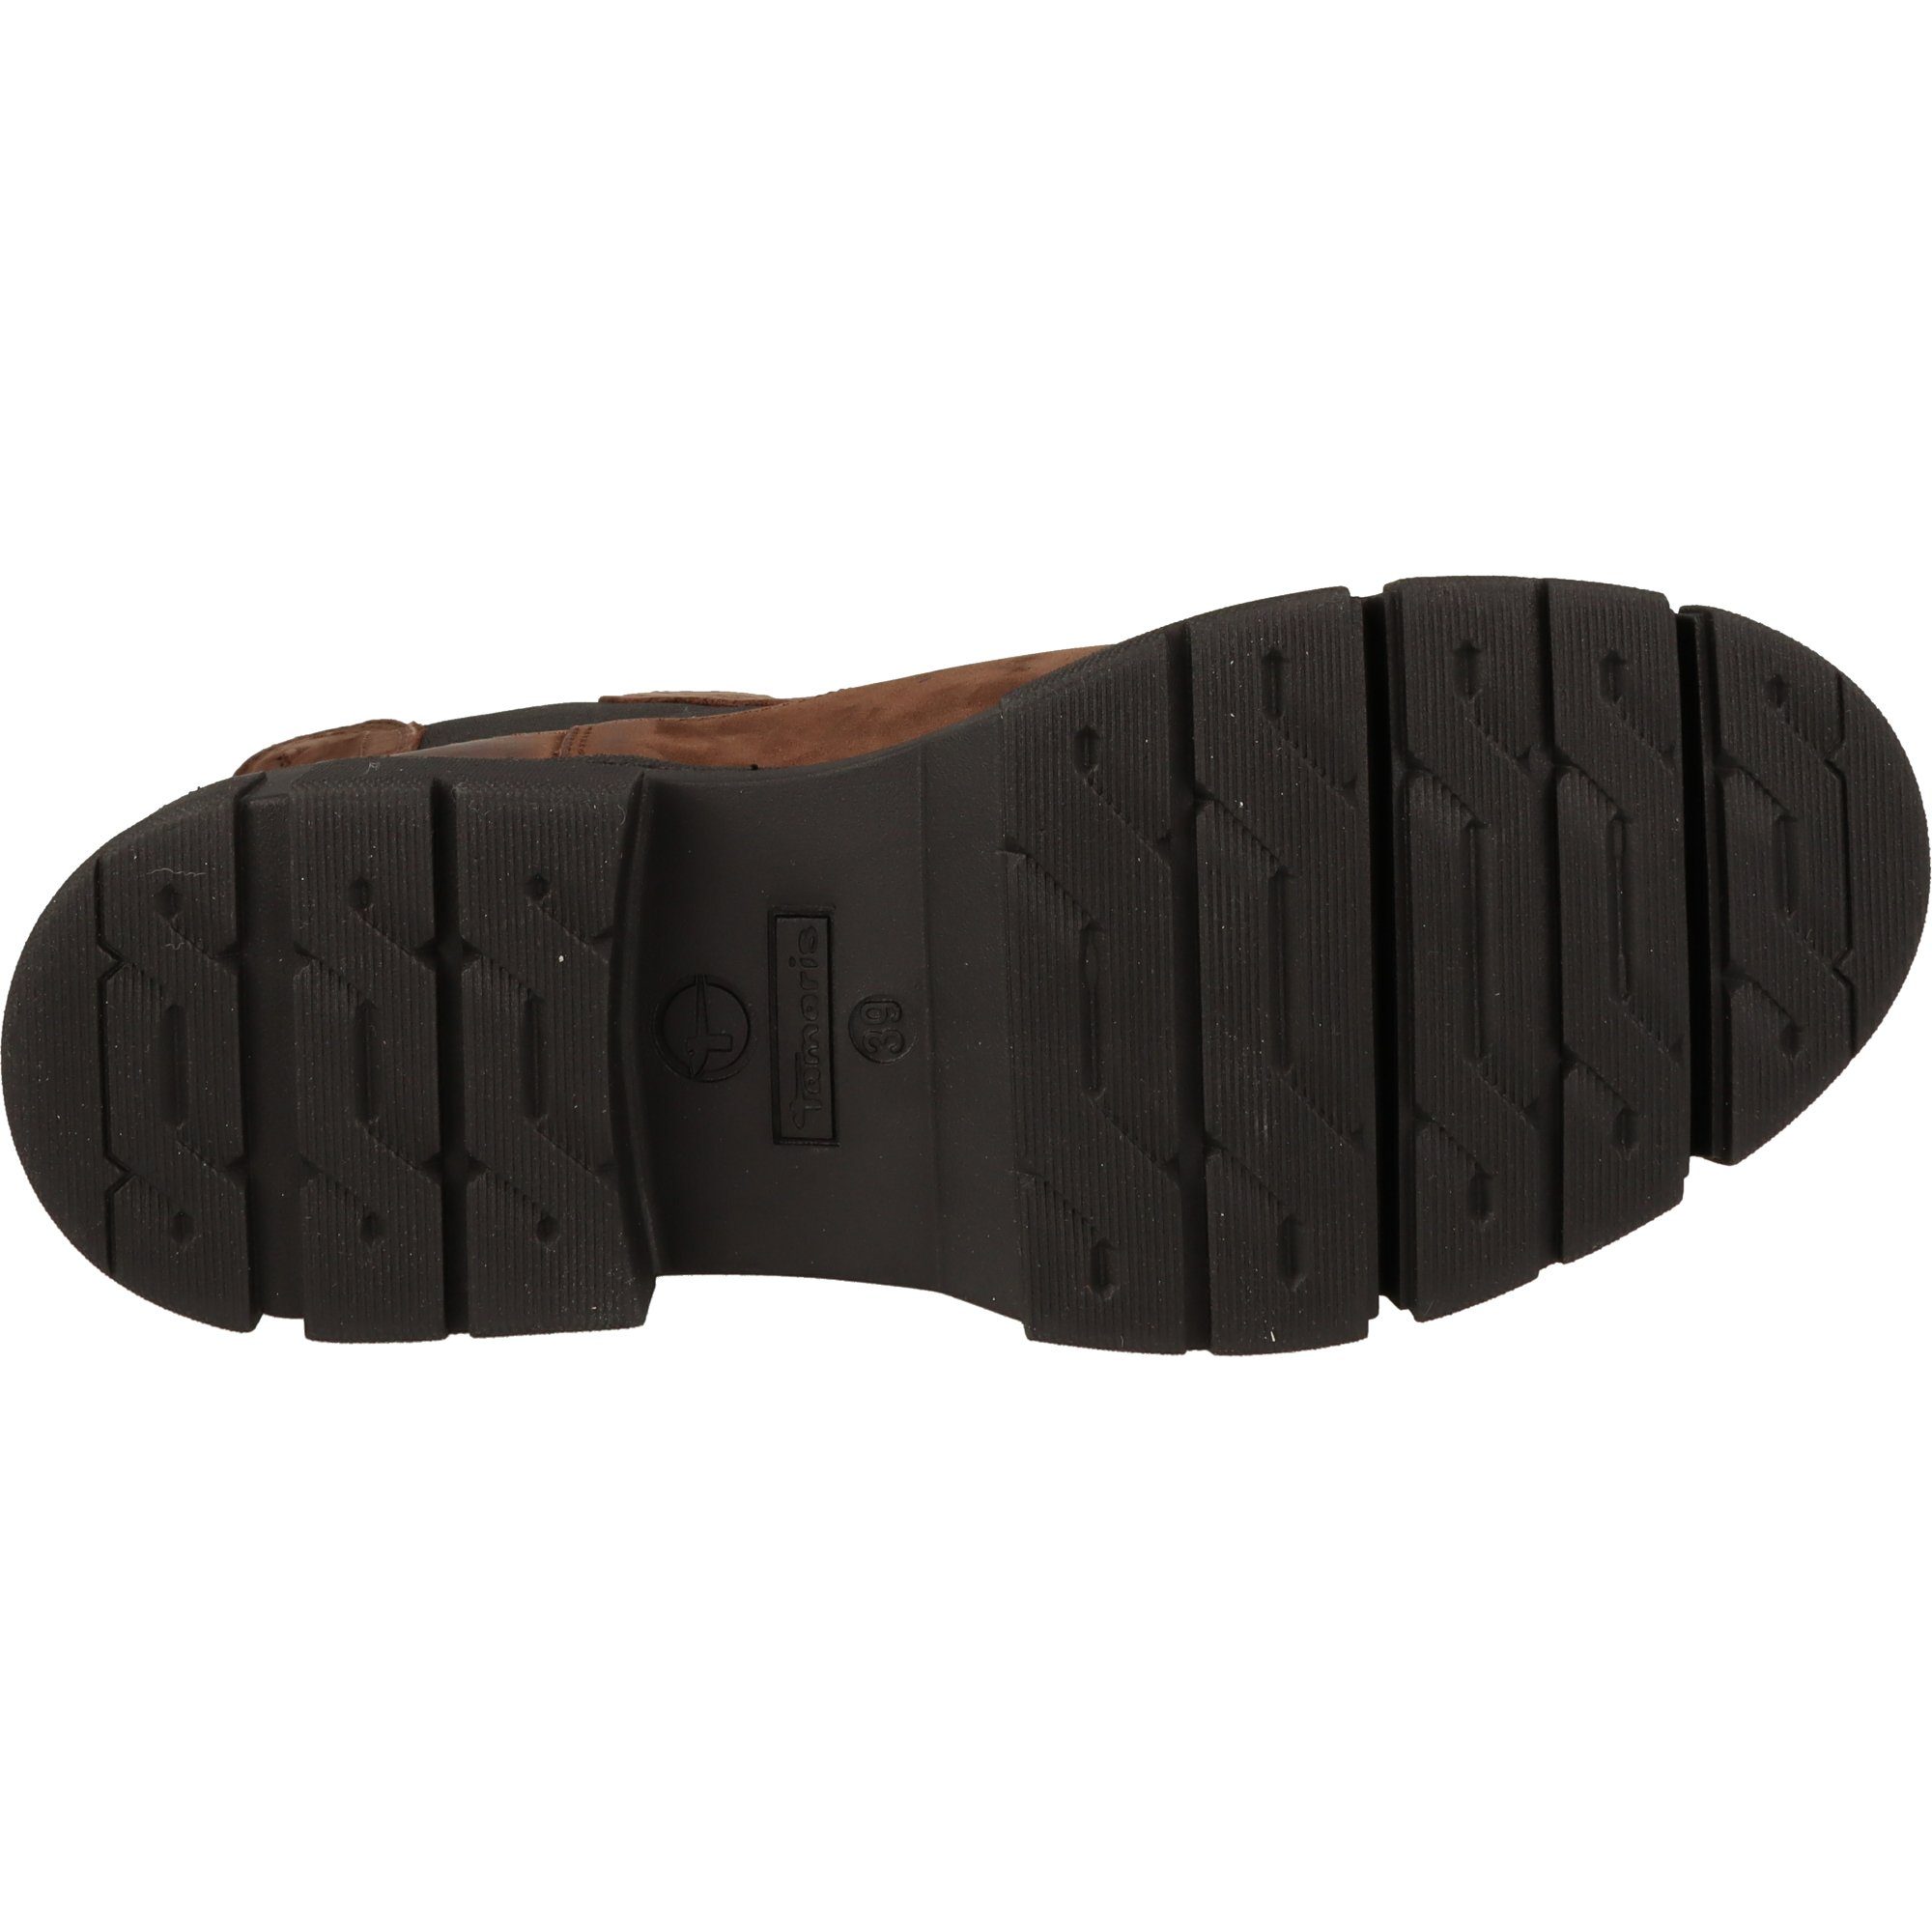 1-25901-41 Damen Chelseaboots Nubuc Leder gepolstert Mode Schuhe Stiefel Mocca Tamaris